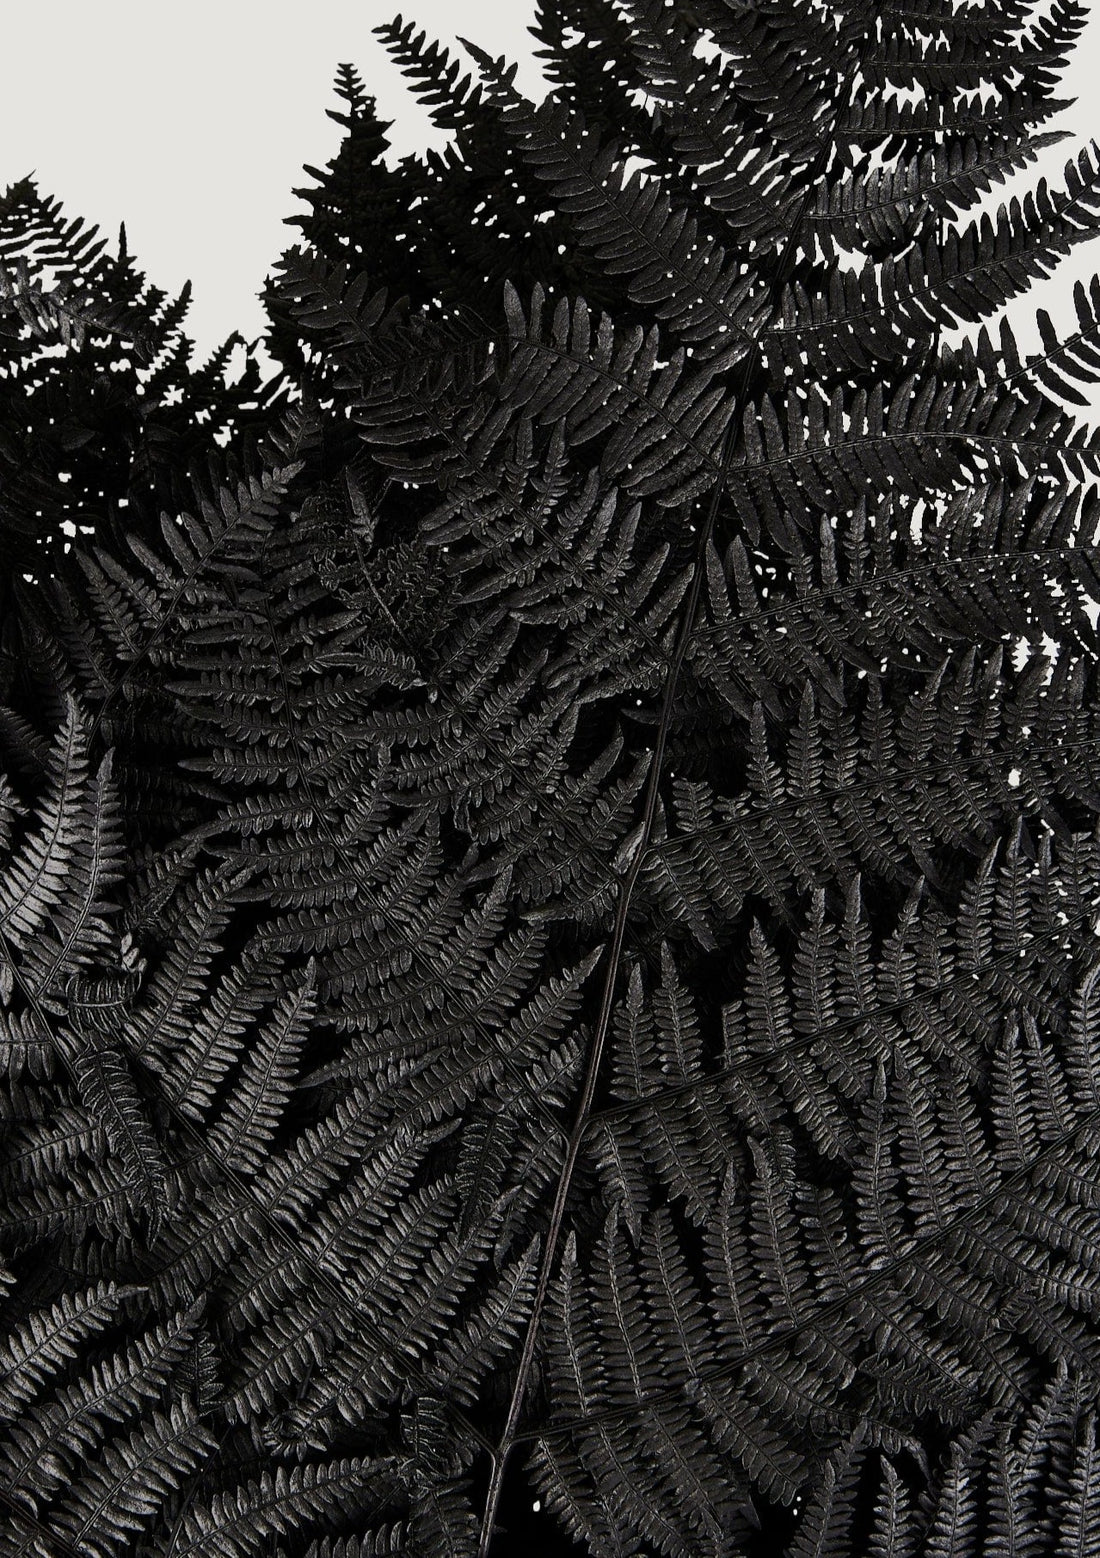 Preserved Bracken Fern Leaves in Black Closeup View at Afloral